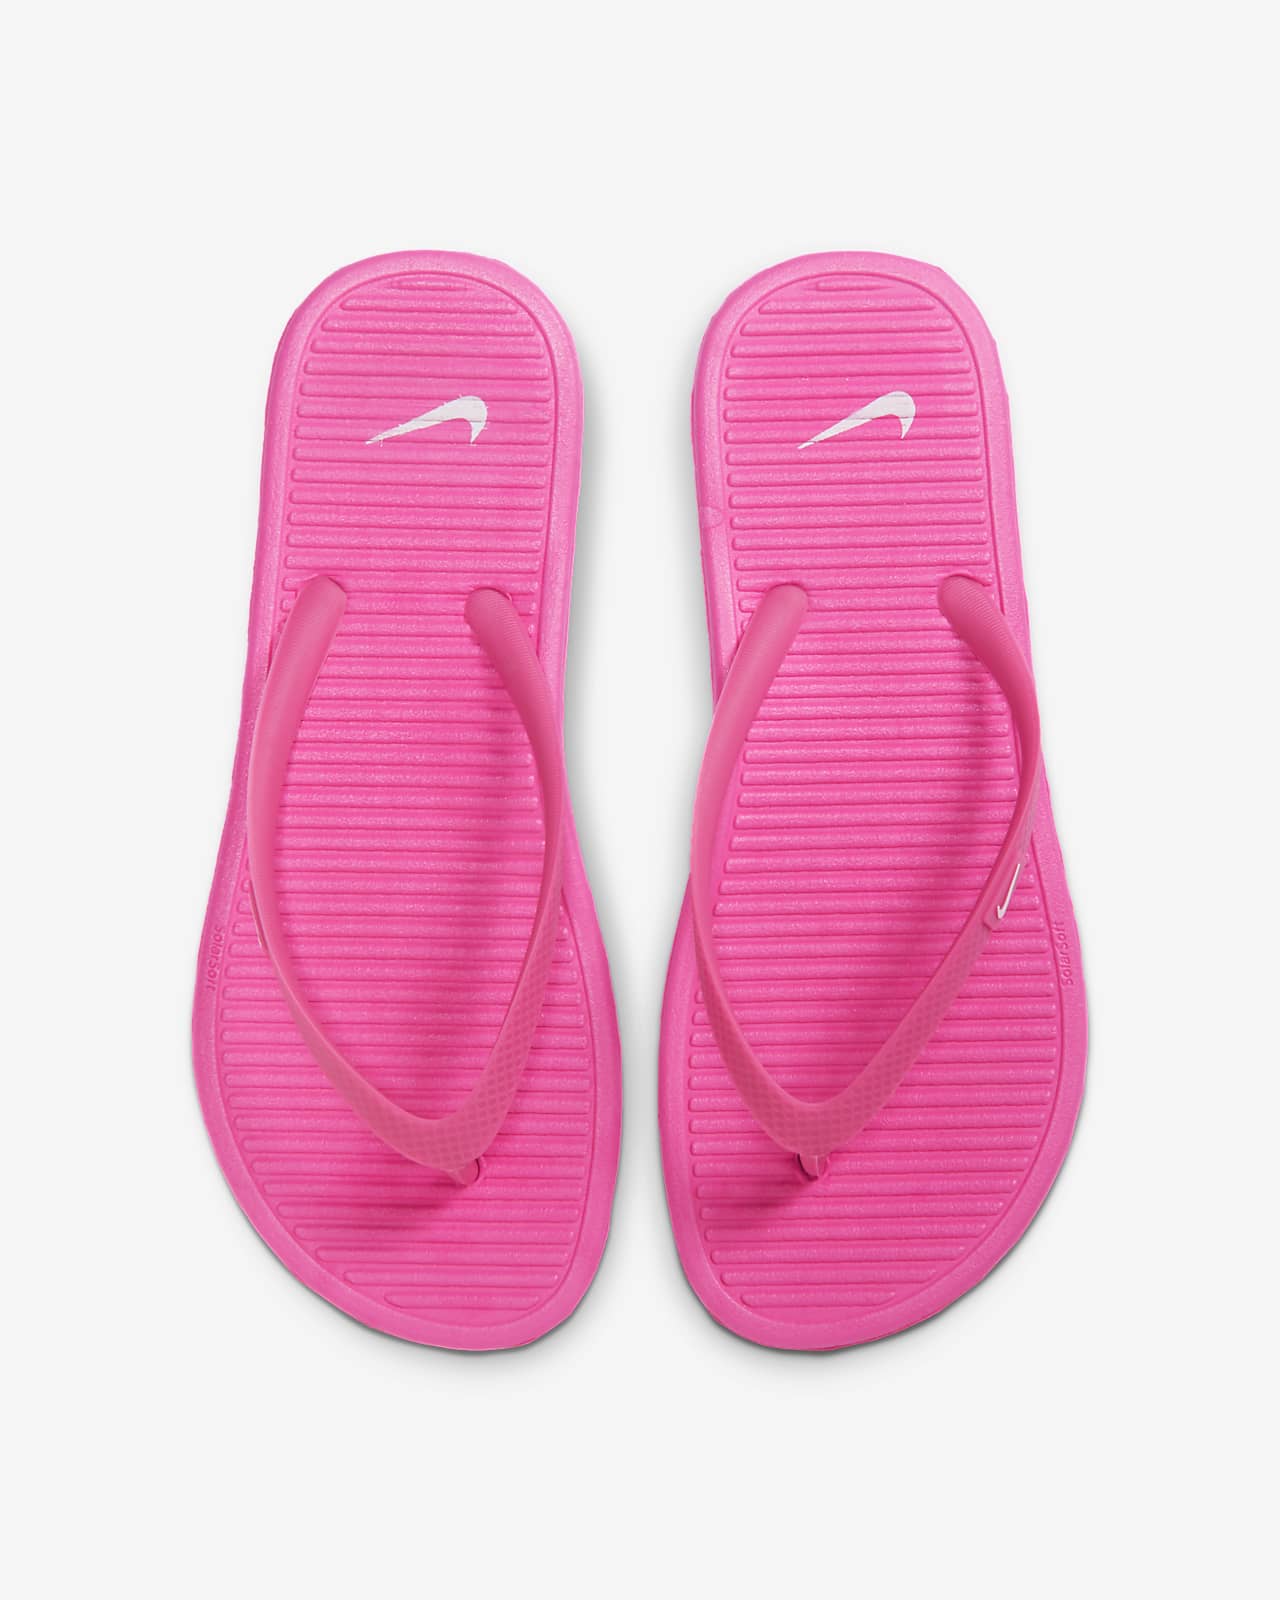 Nike Solarsoft Women's Flip Flop. Nike SG